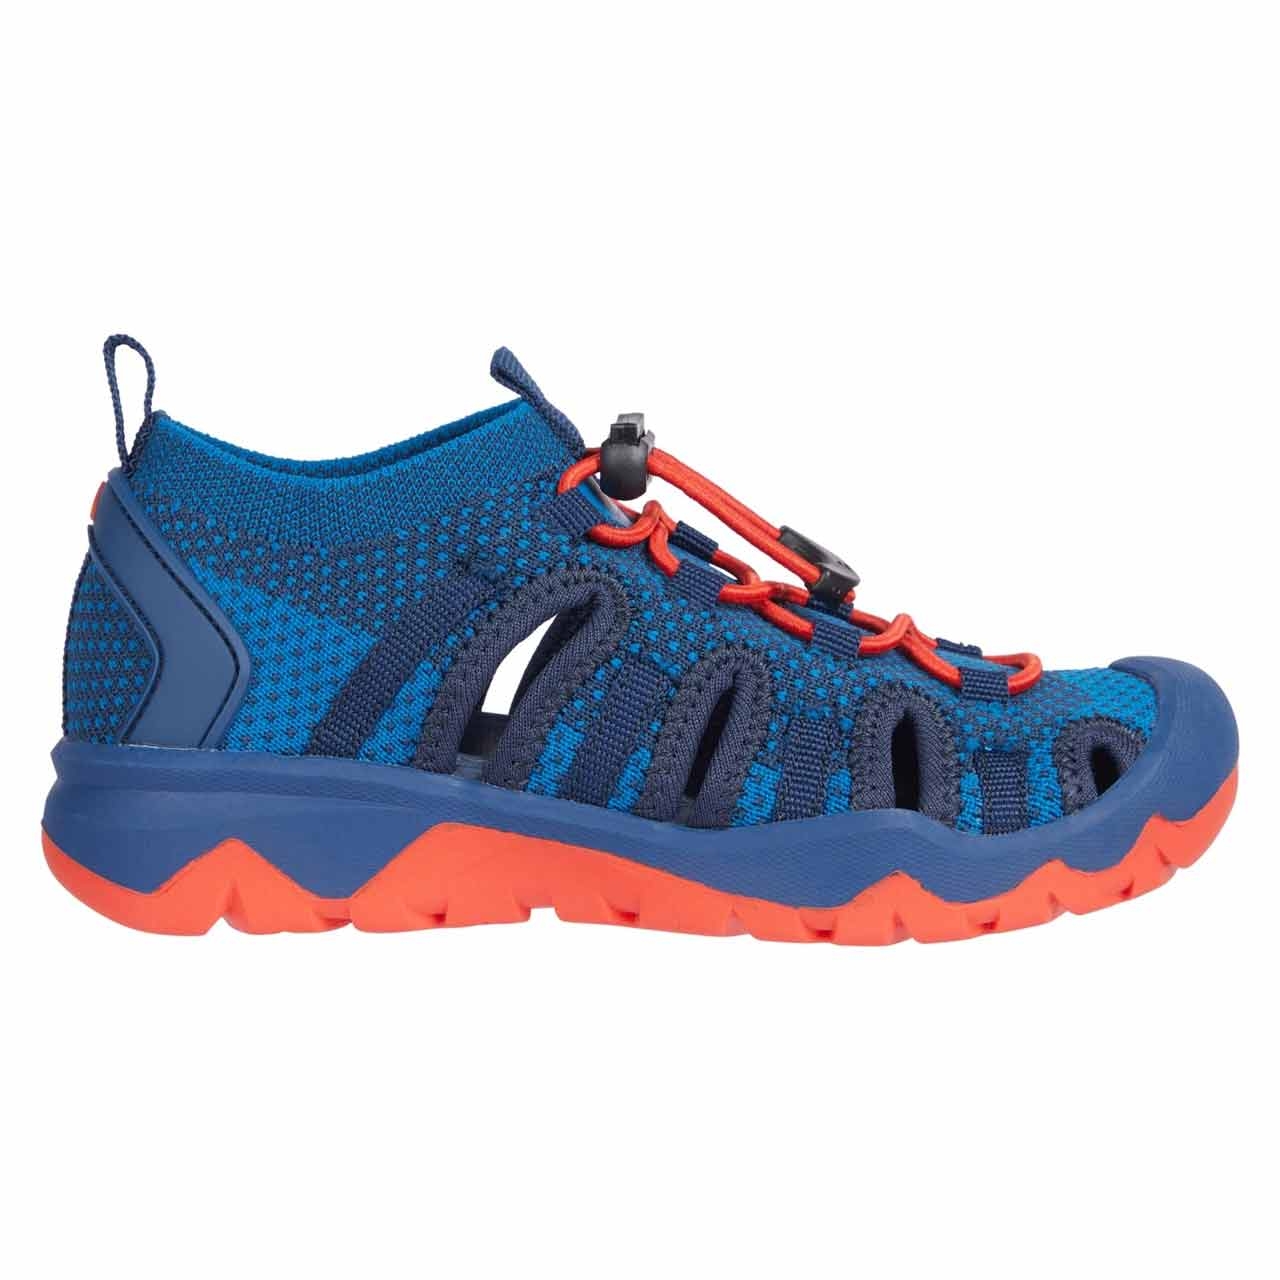 McKINLEY Kinder Outdoor Trekking Stiefel Schuhe Boots Santiago Pro 262115 905 